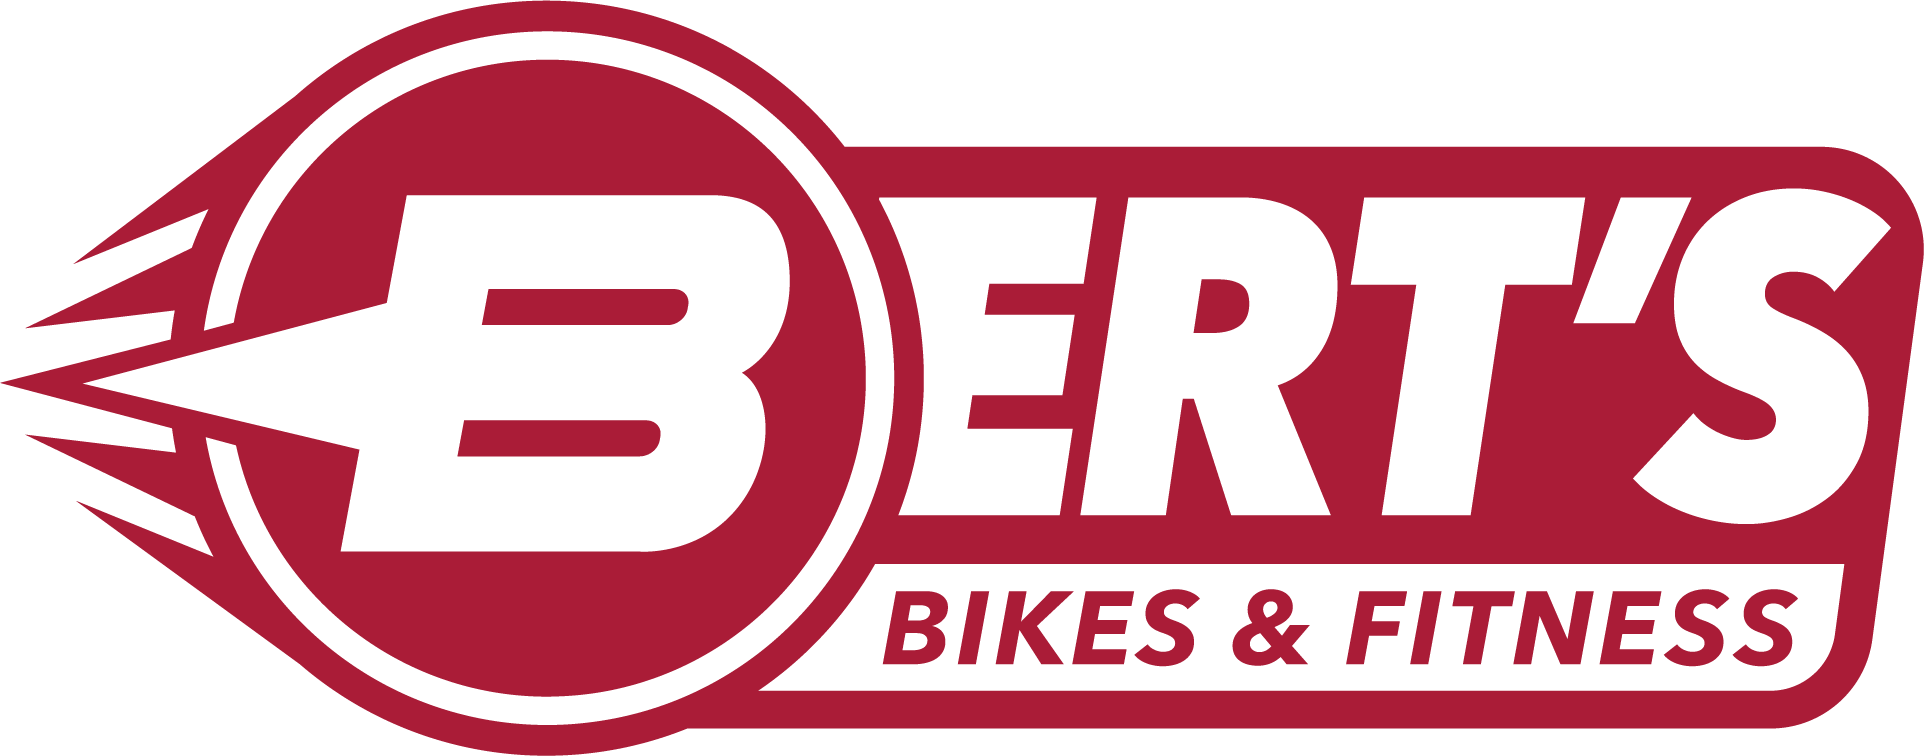 Bert's Bikes & Fitness Home Page